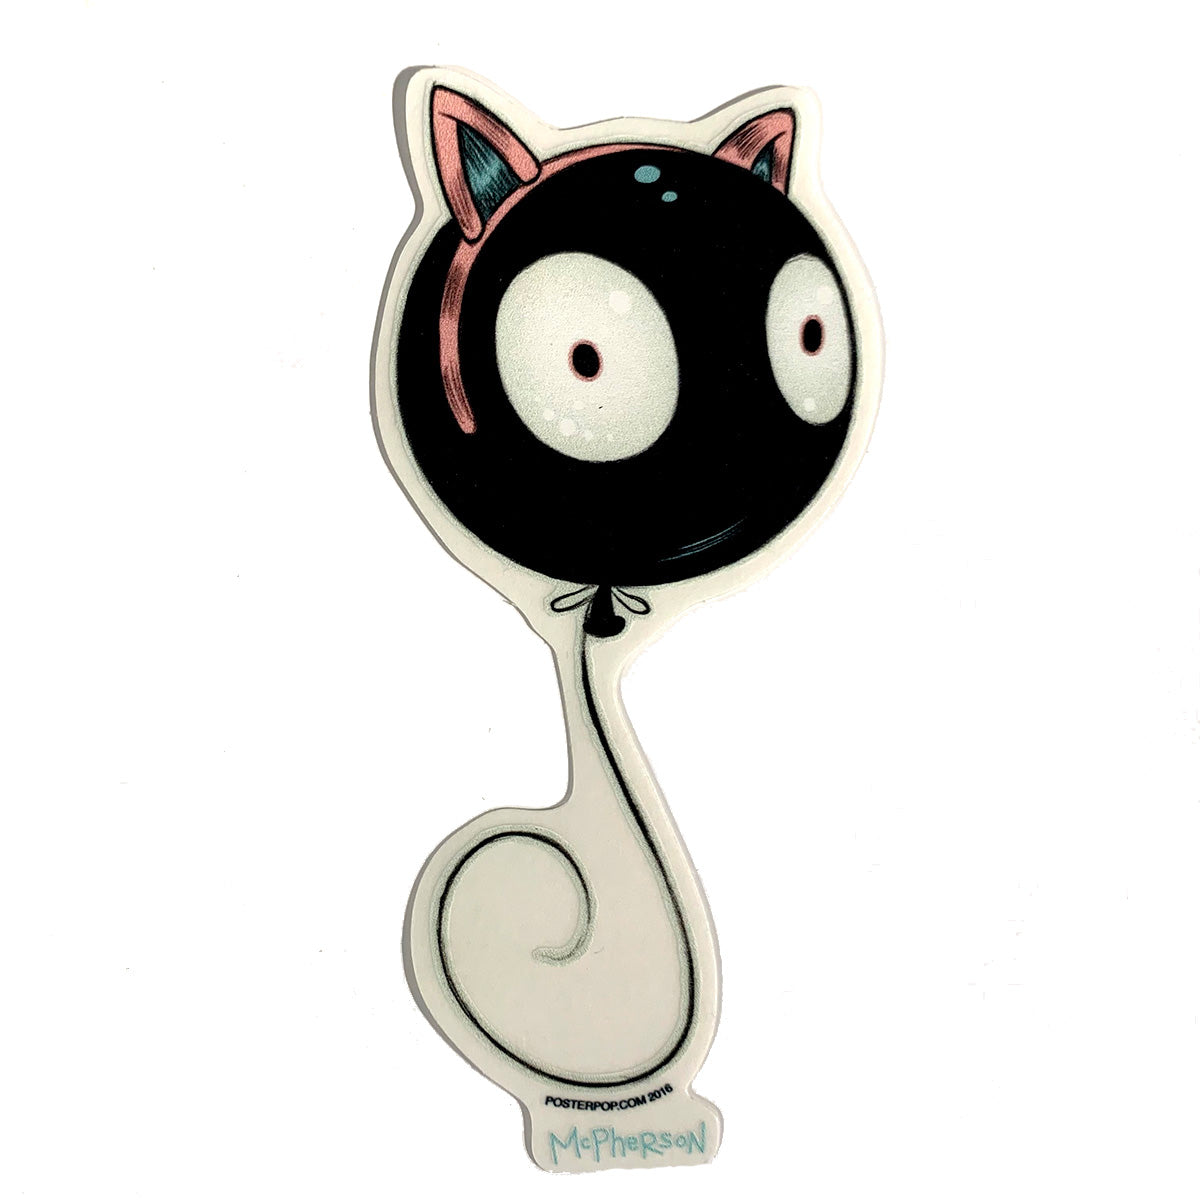 Kitty Wiggle Sticker